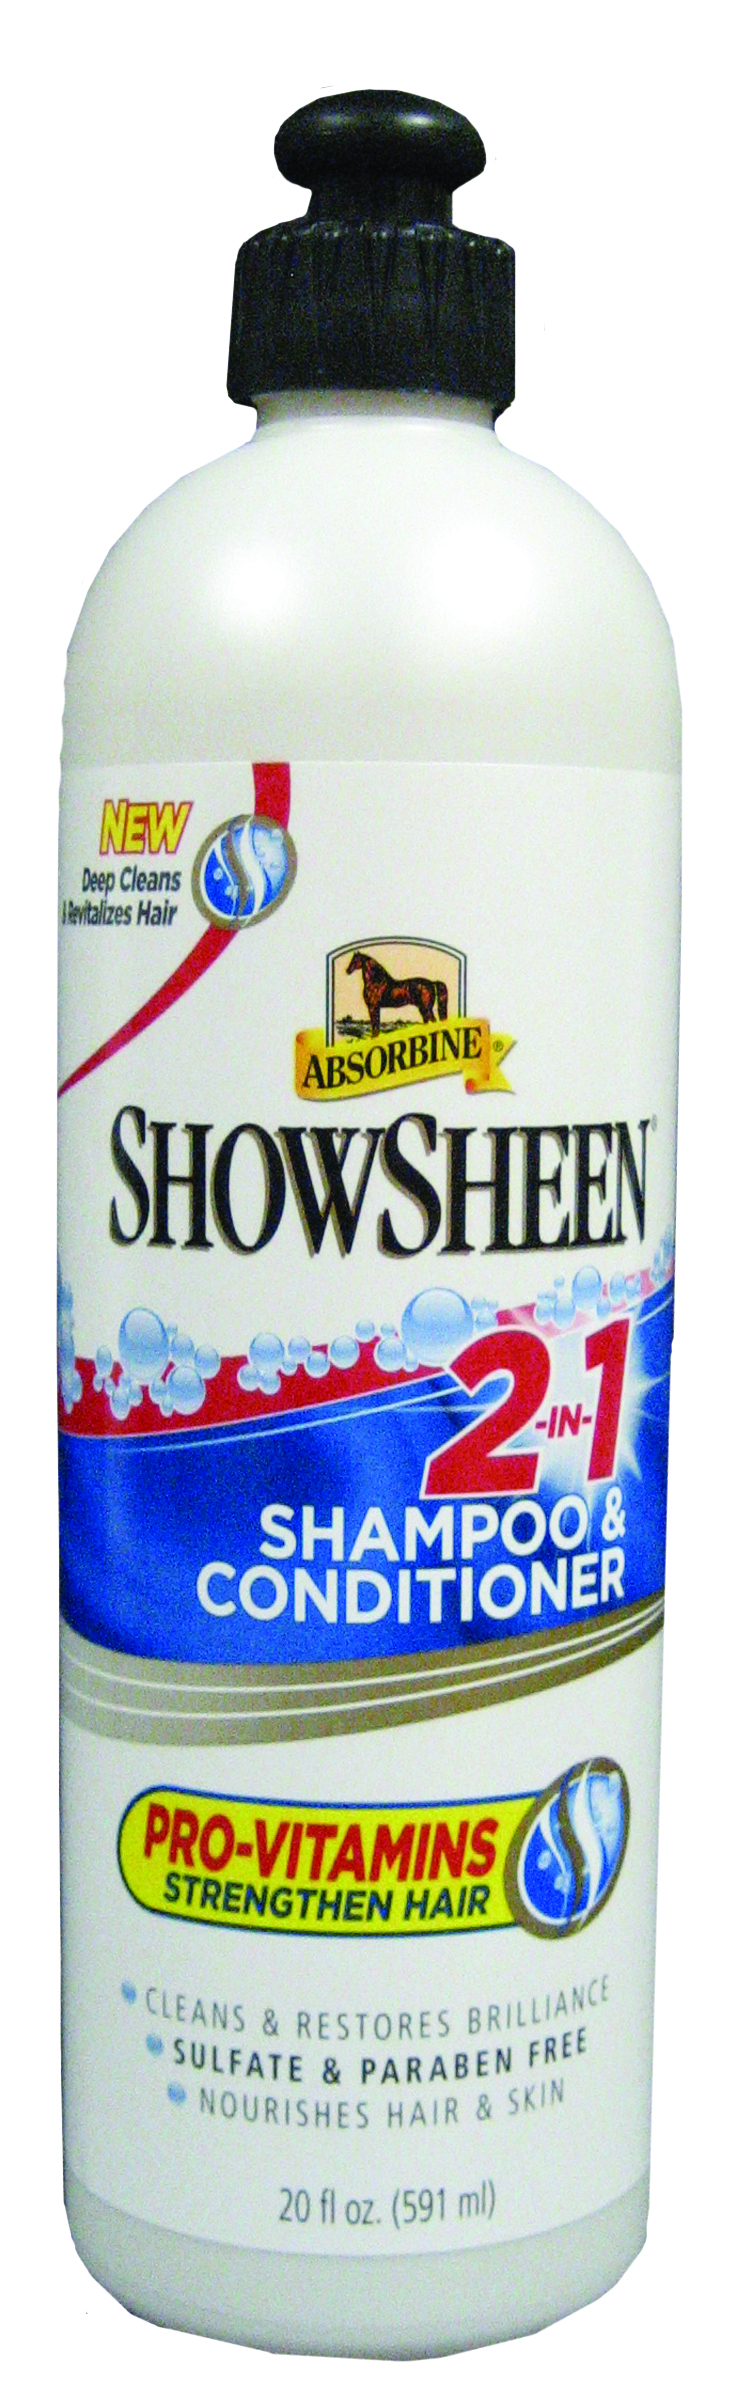 ABSORBINE SHOWSHEEN 2-IN-1 SHAMPOO & CONDITIONER